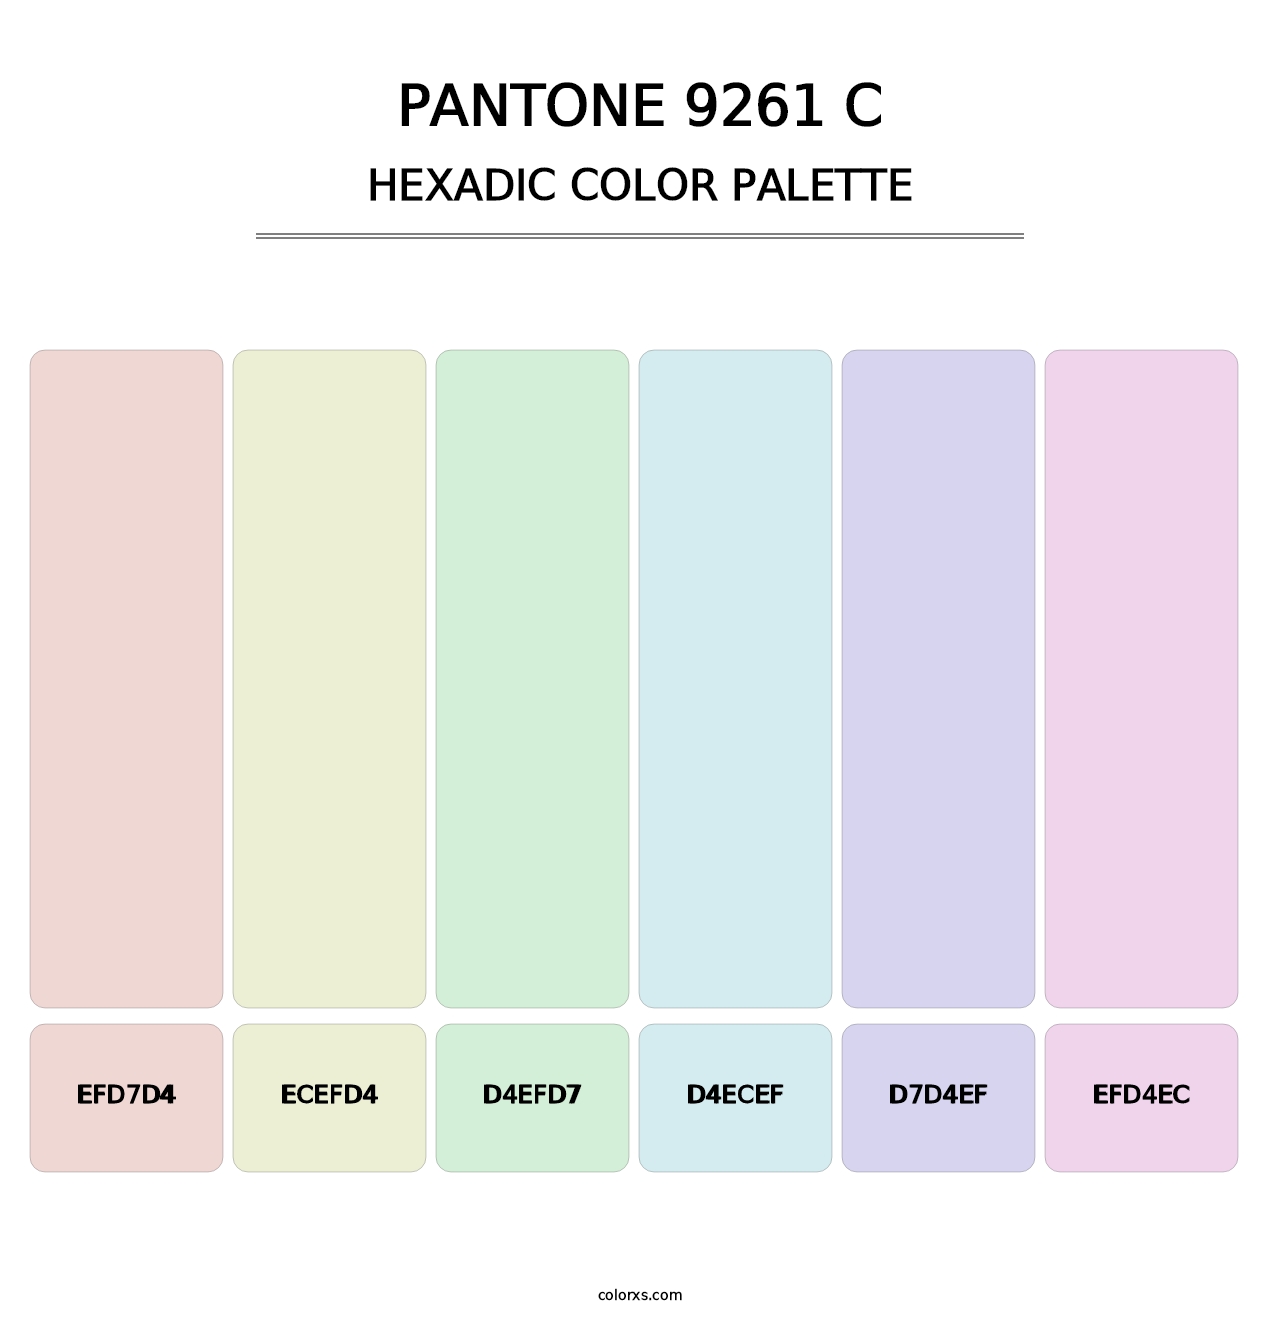 PANTONE 9261 C - Hexadic Color Palette